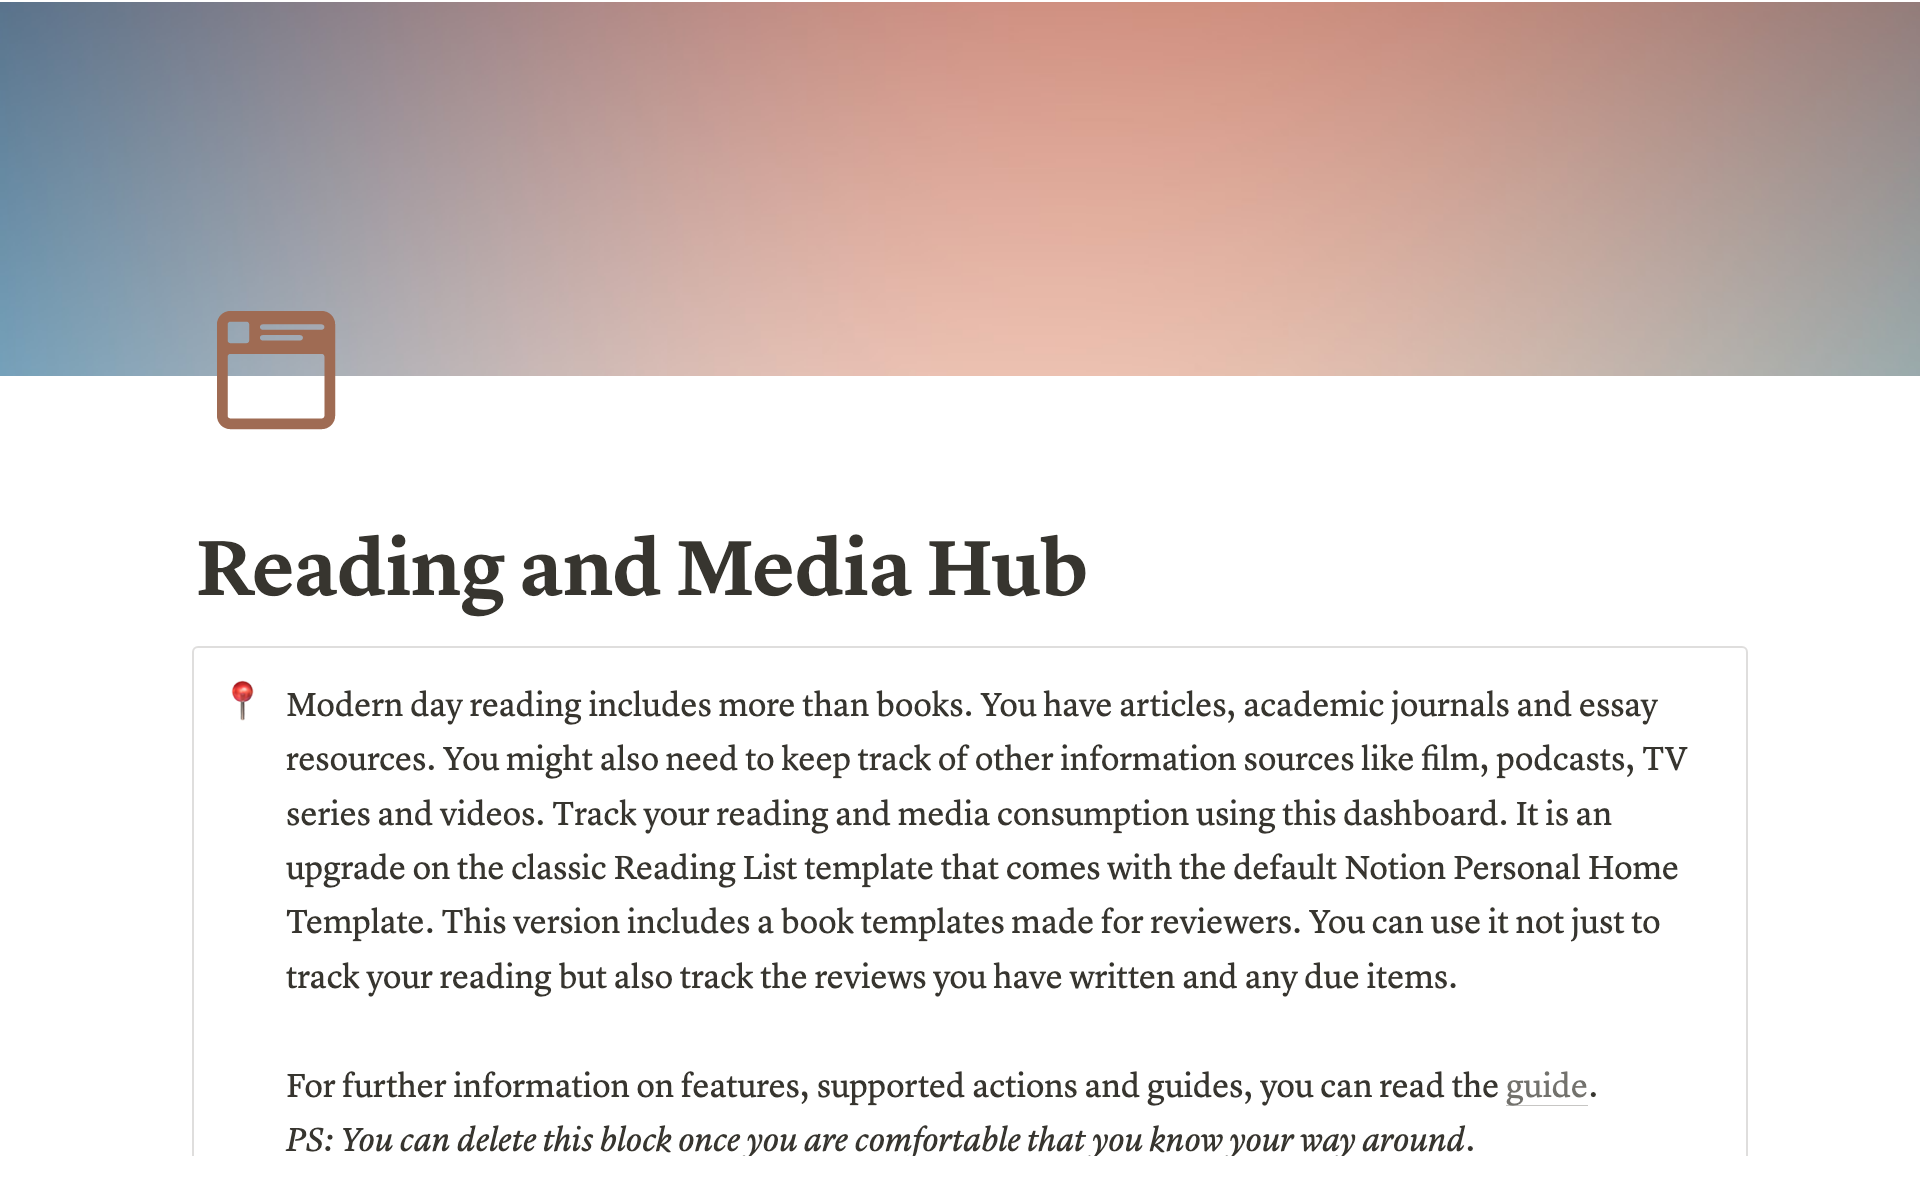 Aperçu du modèle de Reading and Media Hub